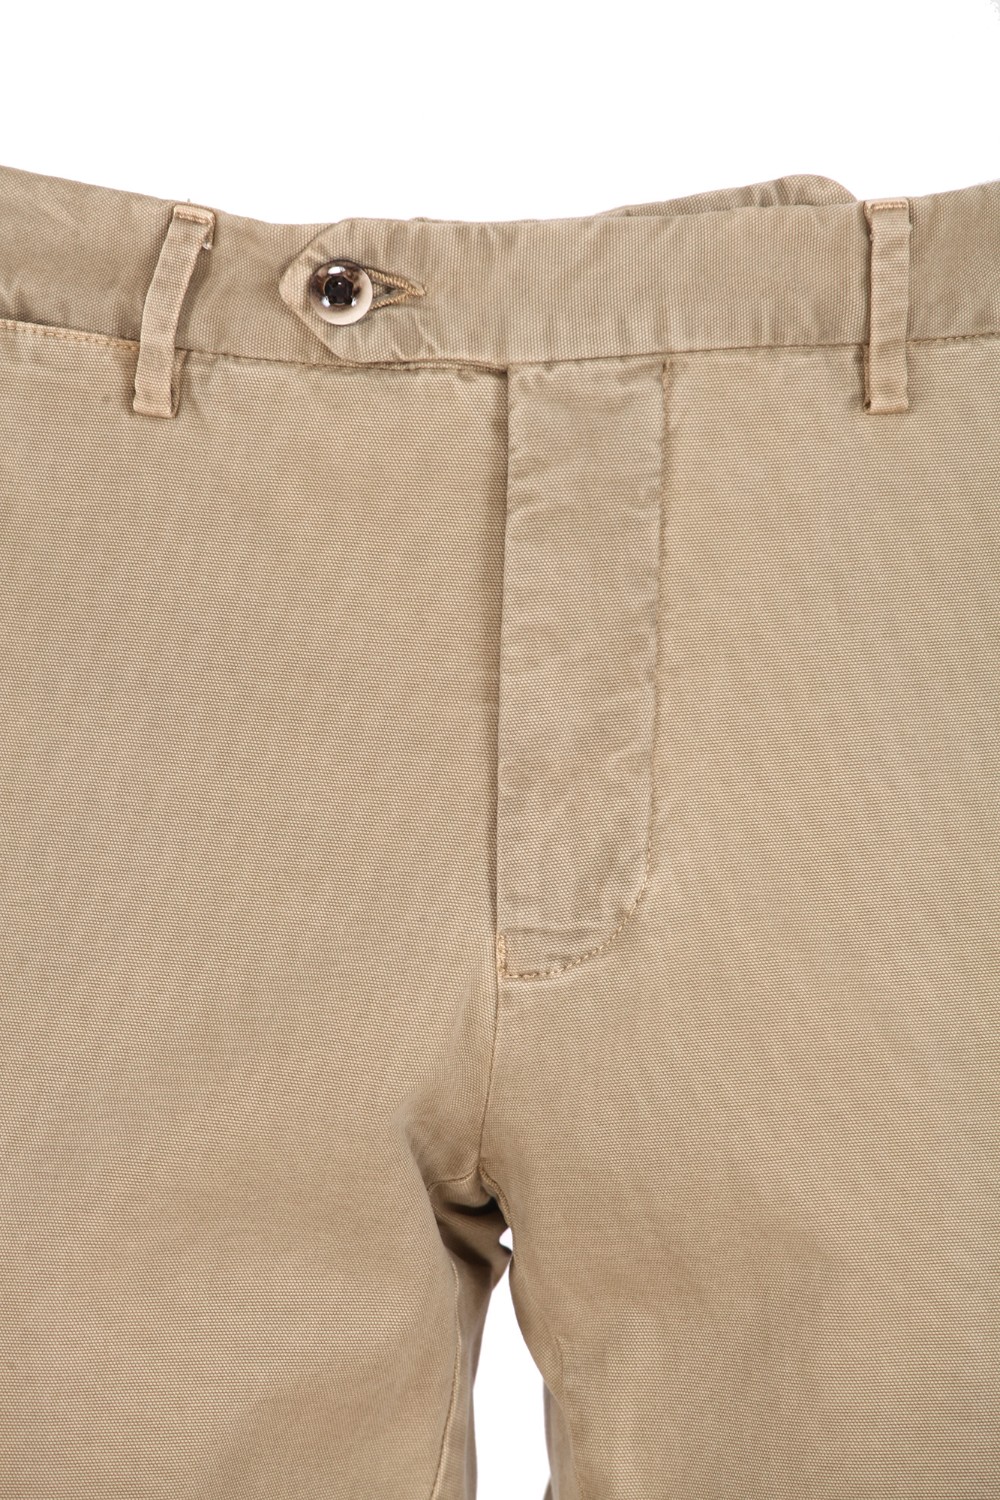 shop GERMANO Saldi Pantalone: Germano pantalone in cotone.
Drop 6.
Chiusura con zip e bottone sovrapposto.
Regular fit.
Composizione: 97% cotone 3% elastan.
Made in Italy.. 524 59J2-426 number 5532272